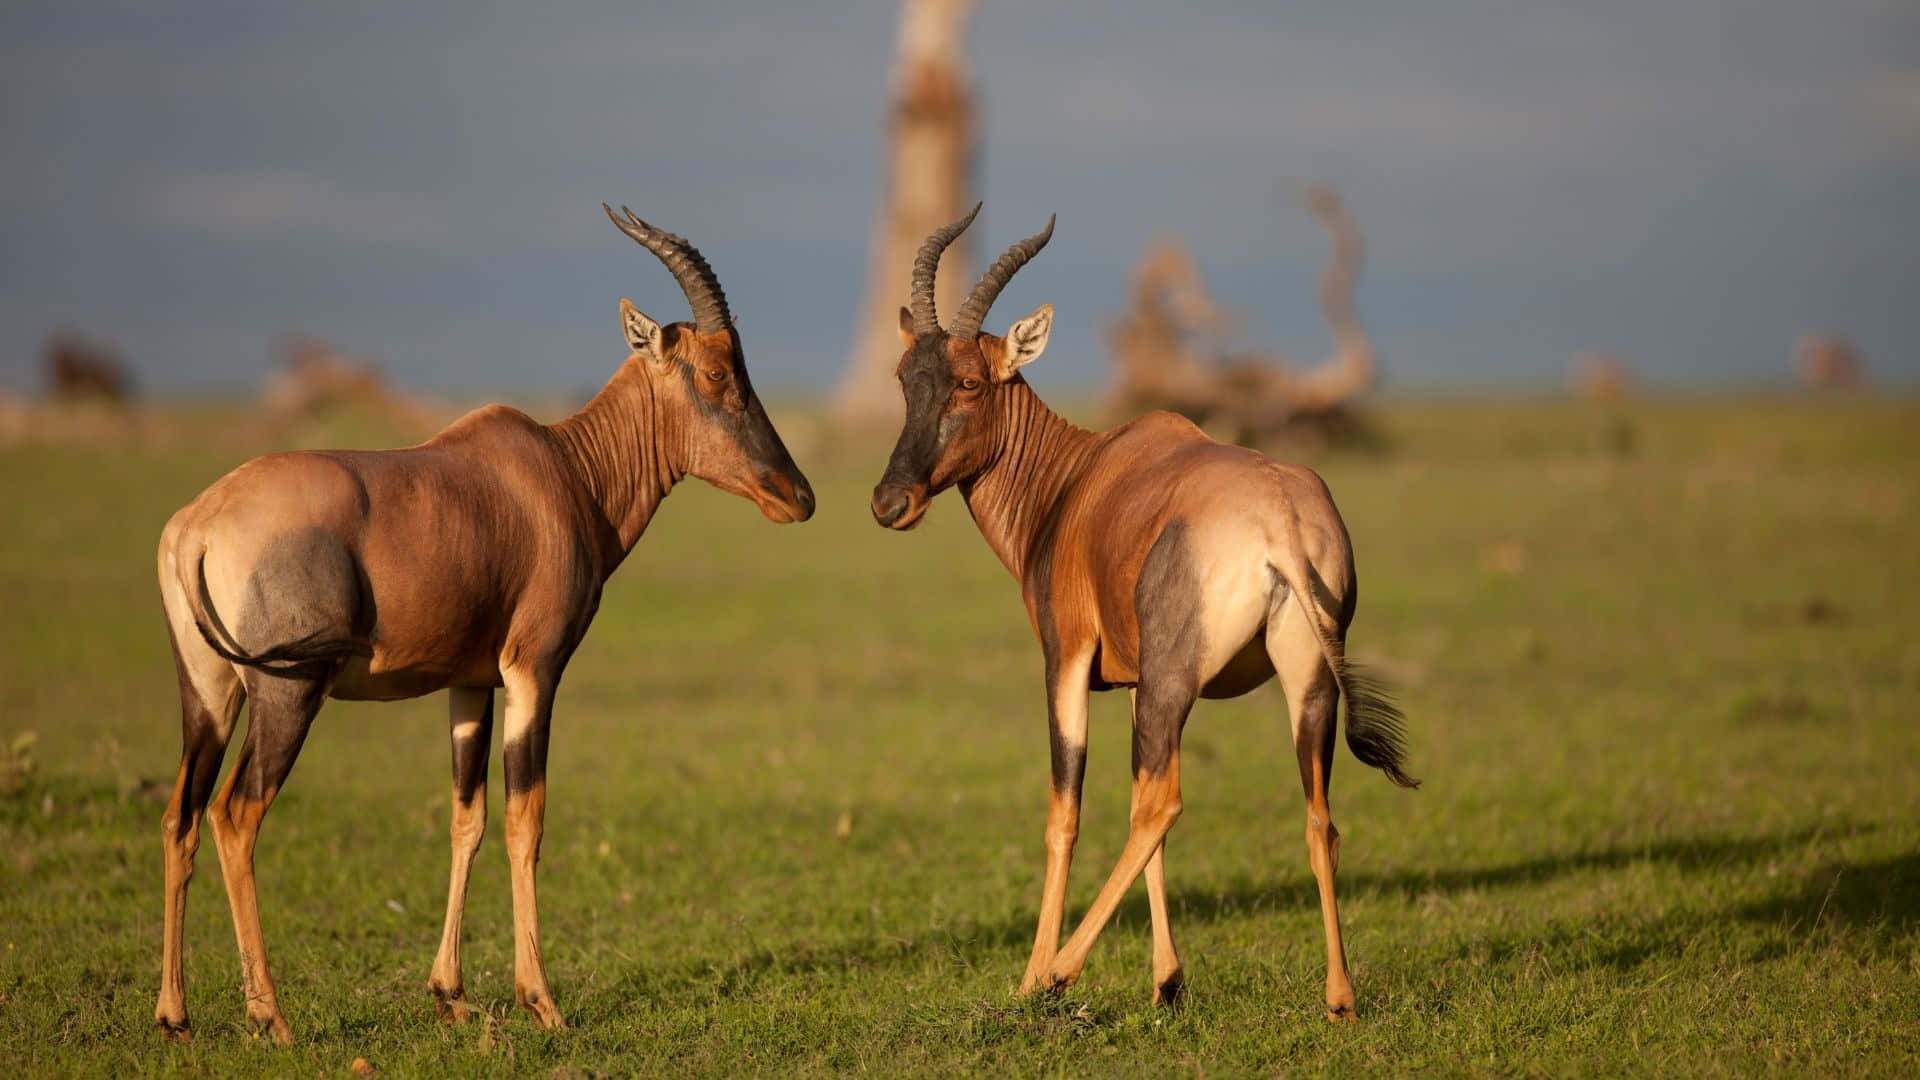 Topi Antelopes Facing Each Otherin Grassland Wallpaper